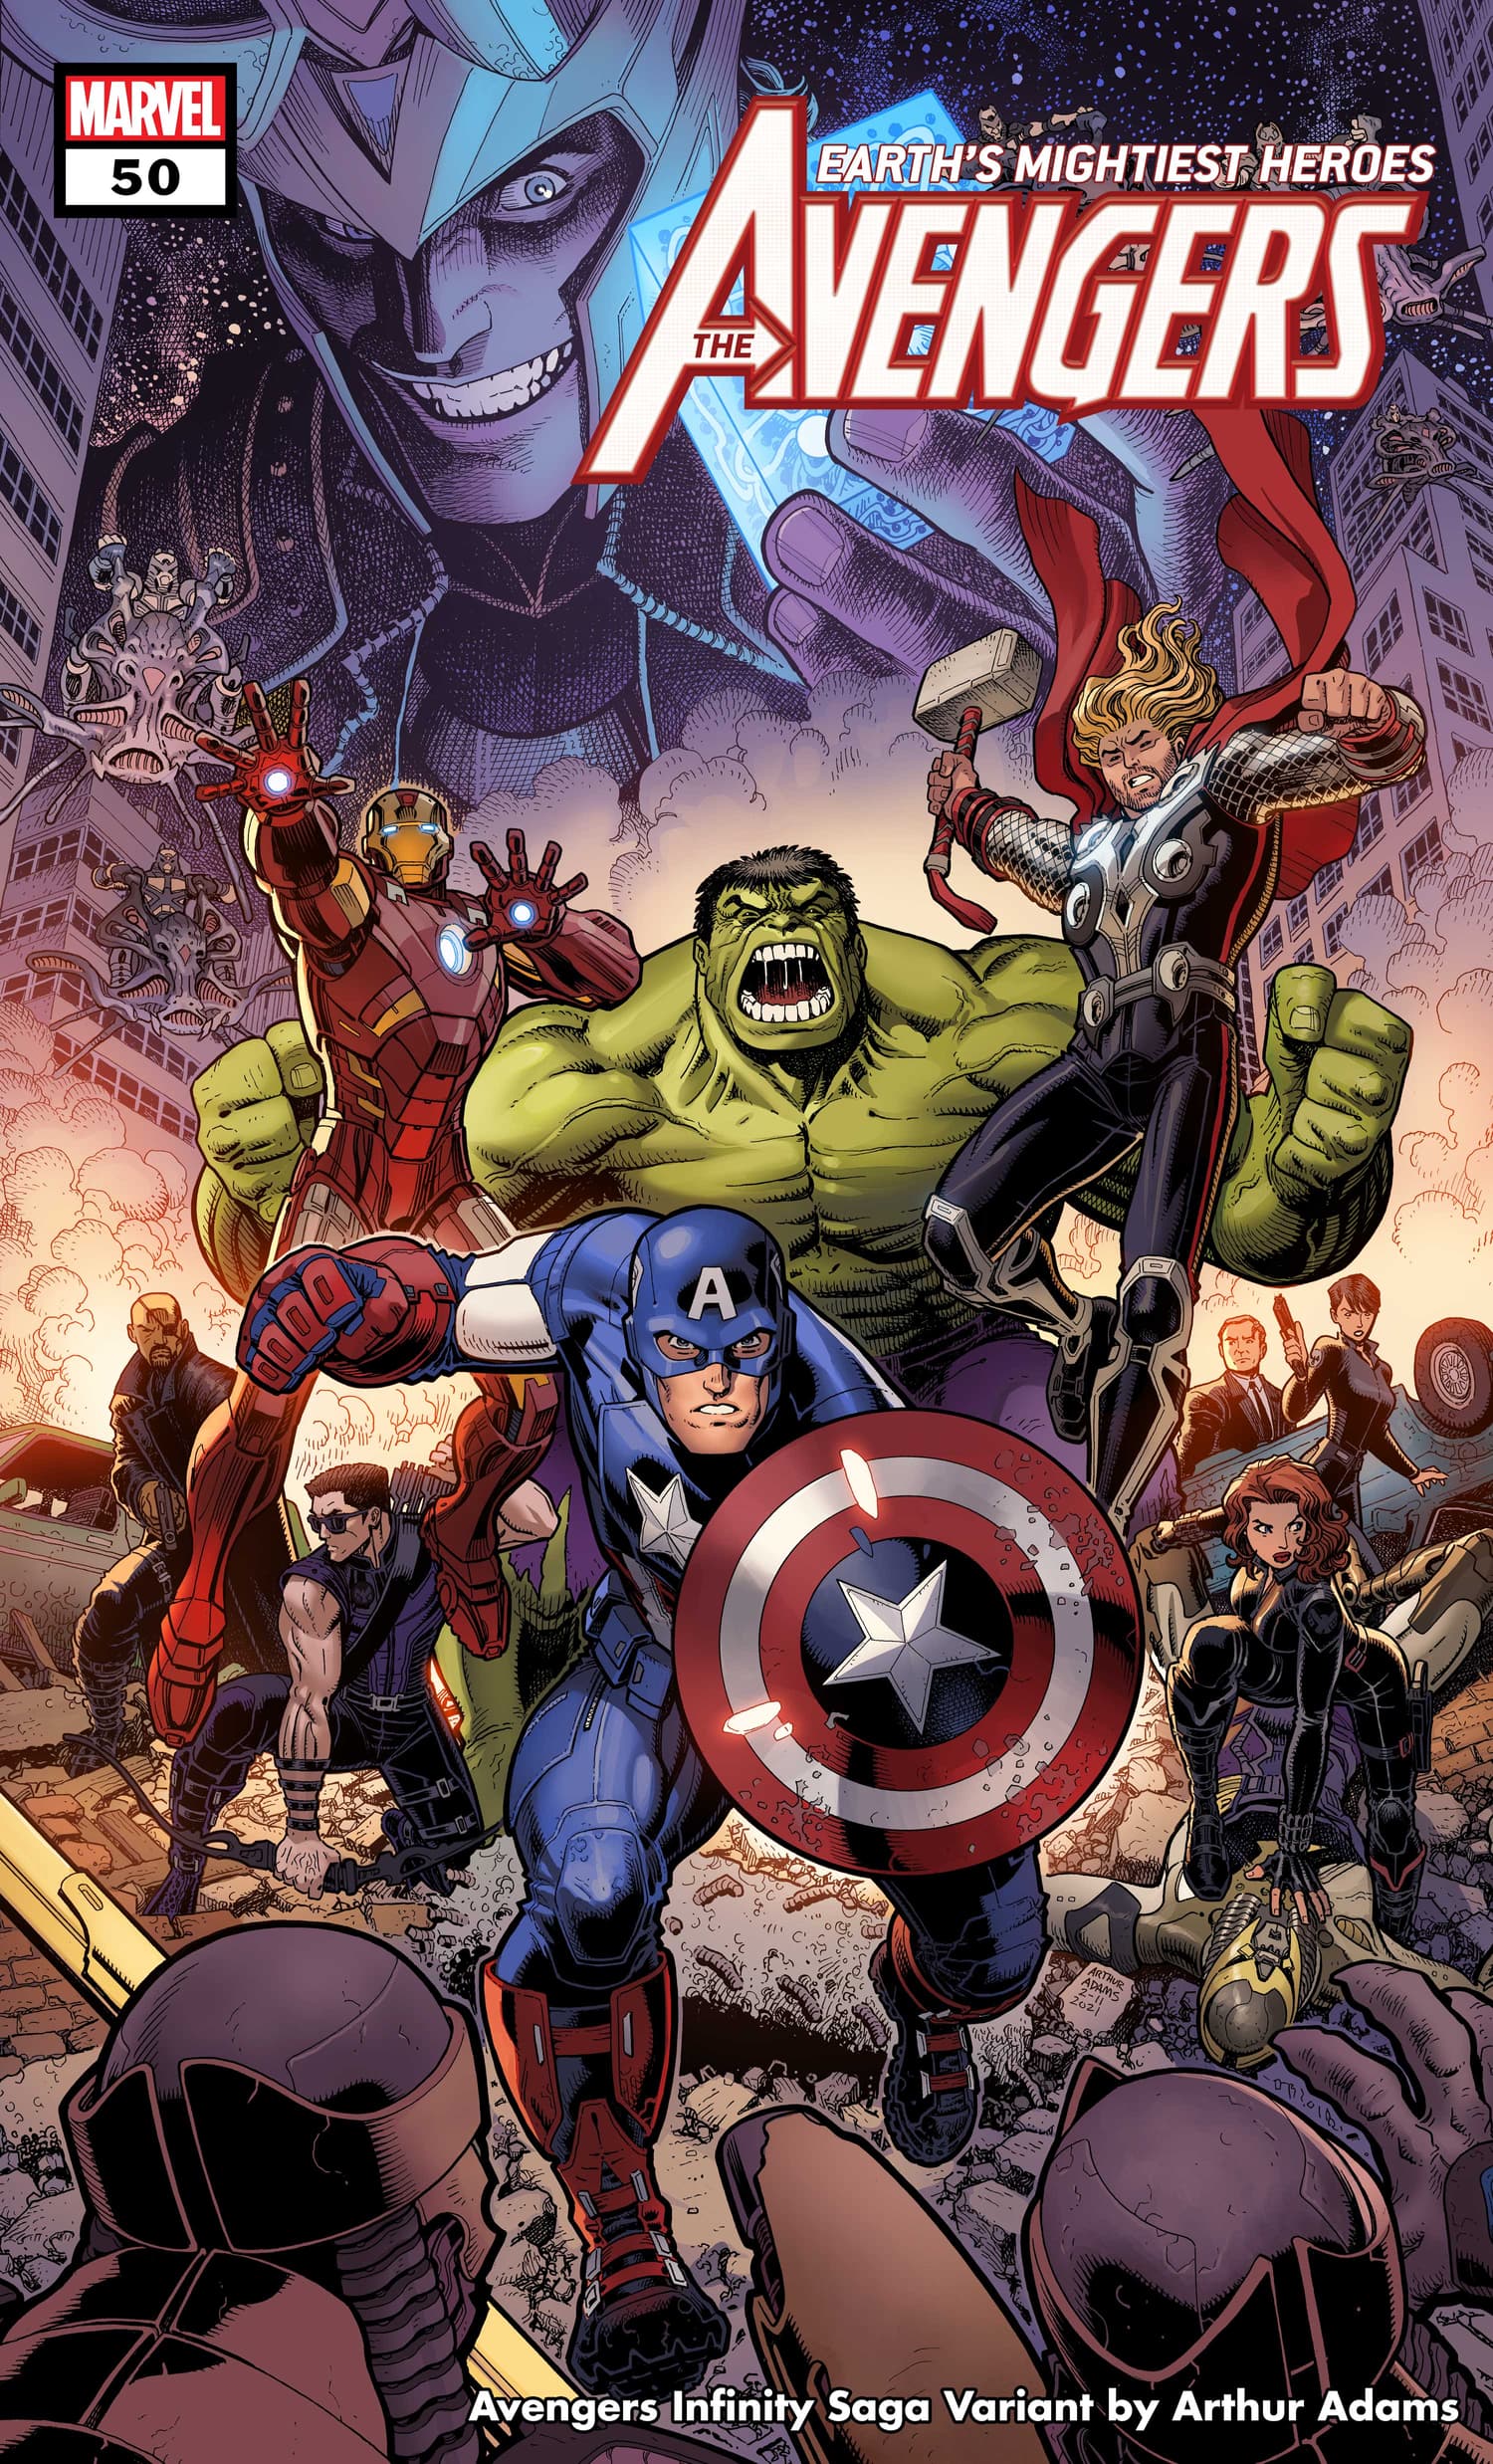 Avengers #50 Infinity Saga by Art Adams